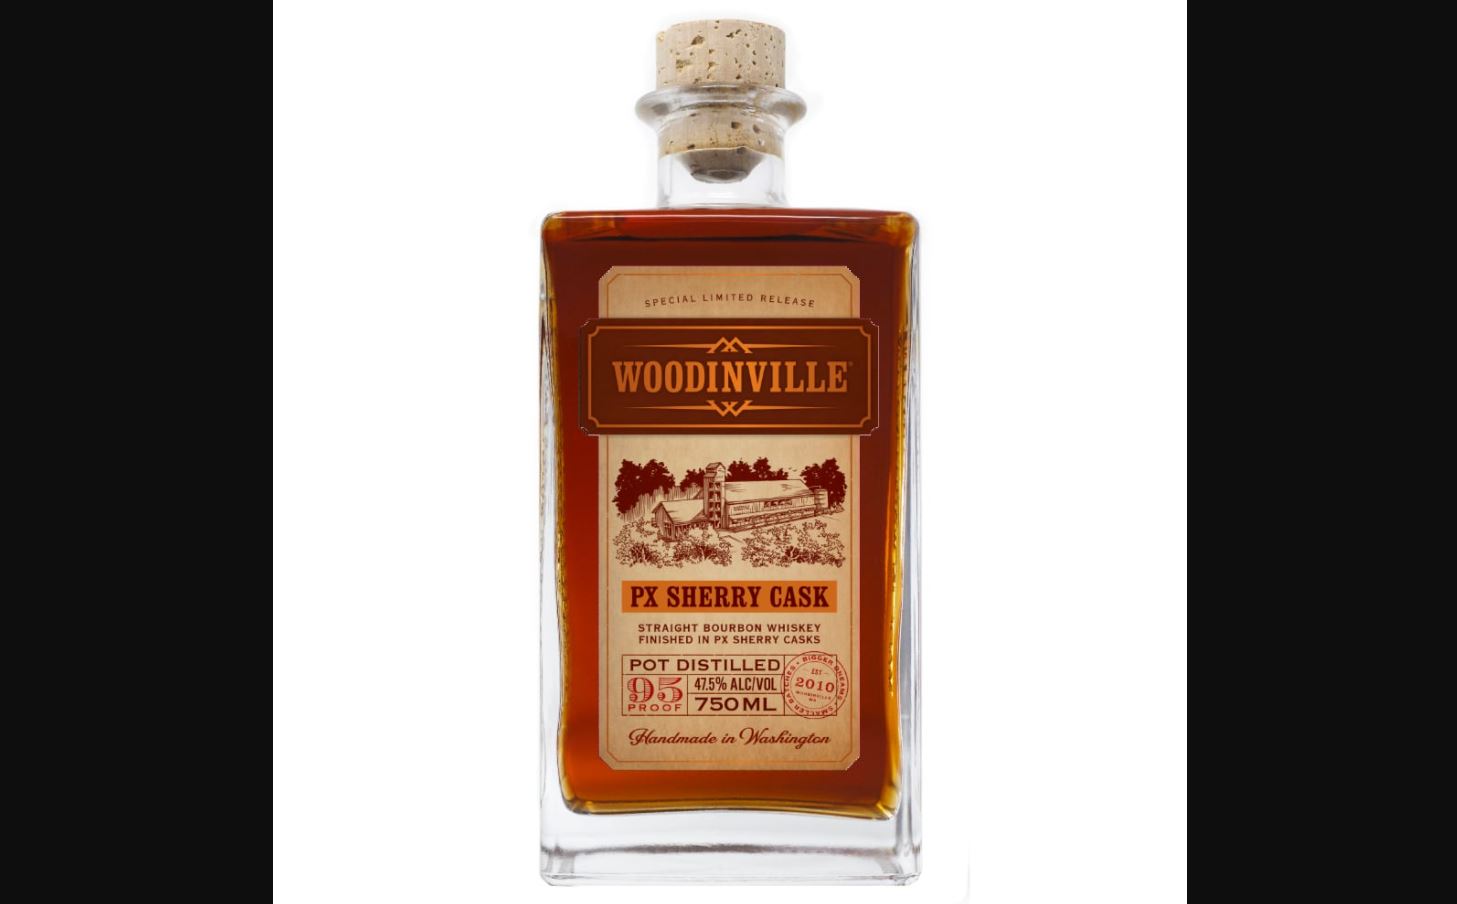 Woodinville PX Sherry Cask Bourbon Whiskey